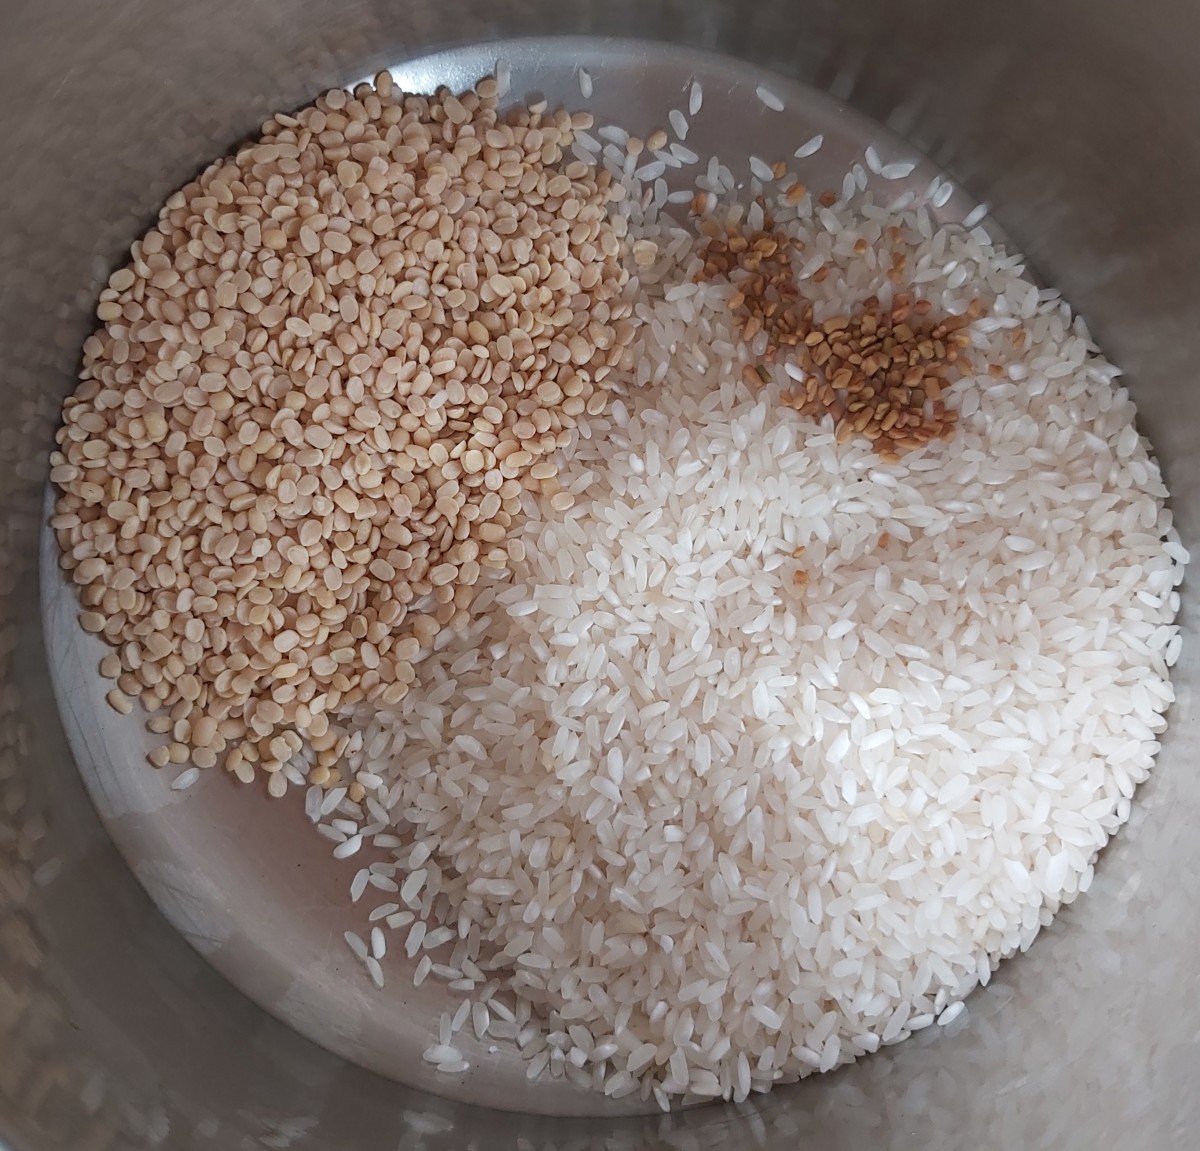 In another bowl or vessel, take 1 cup of dosa rice (or use sonamasuri rice), 1/4 cup of urad dal (split black gram) and 1/2 teaspoon fenugreek seeds or methi seeds.